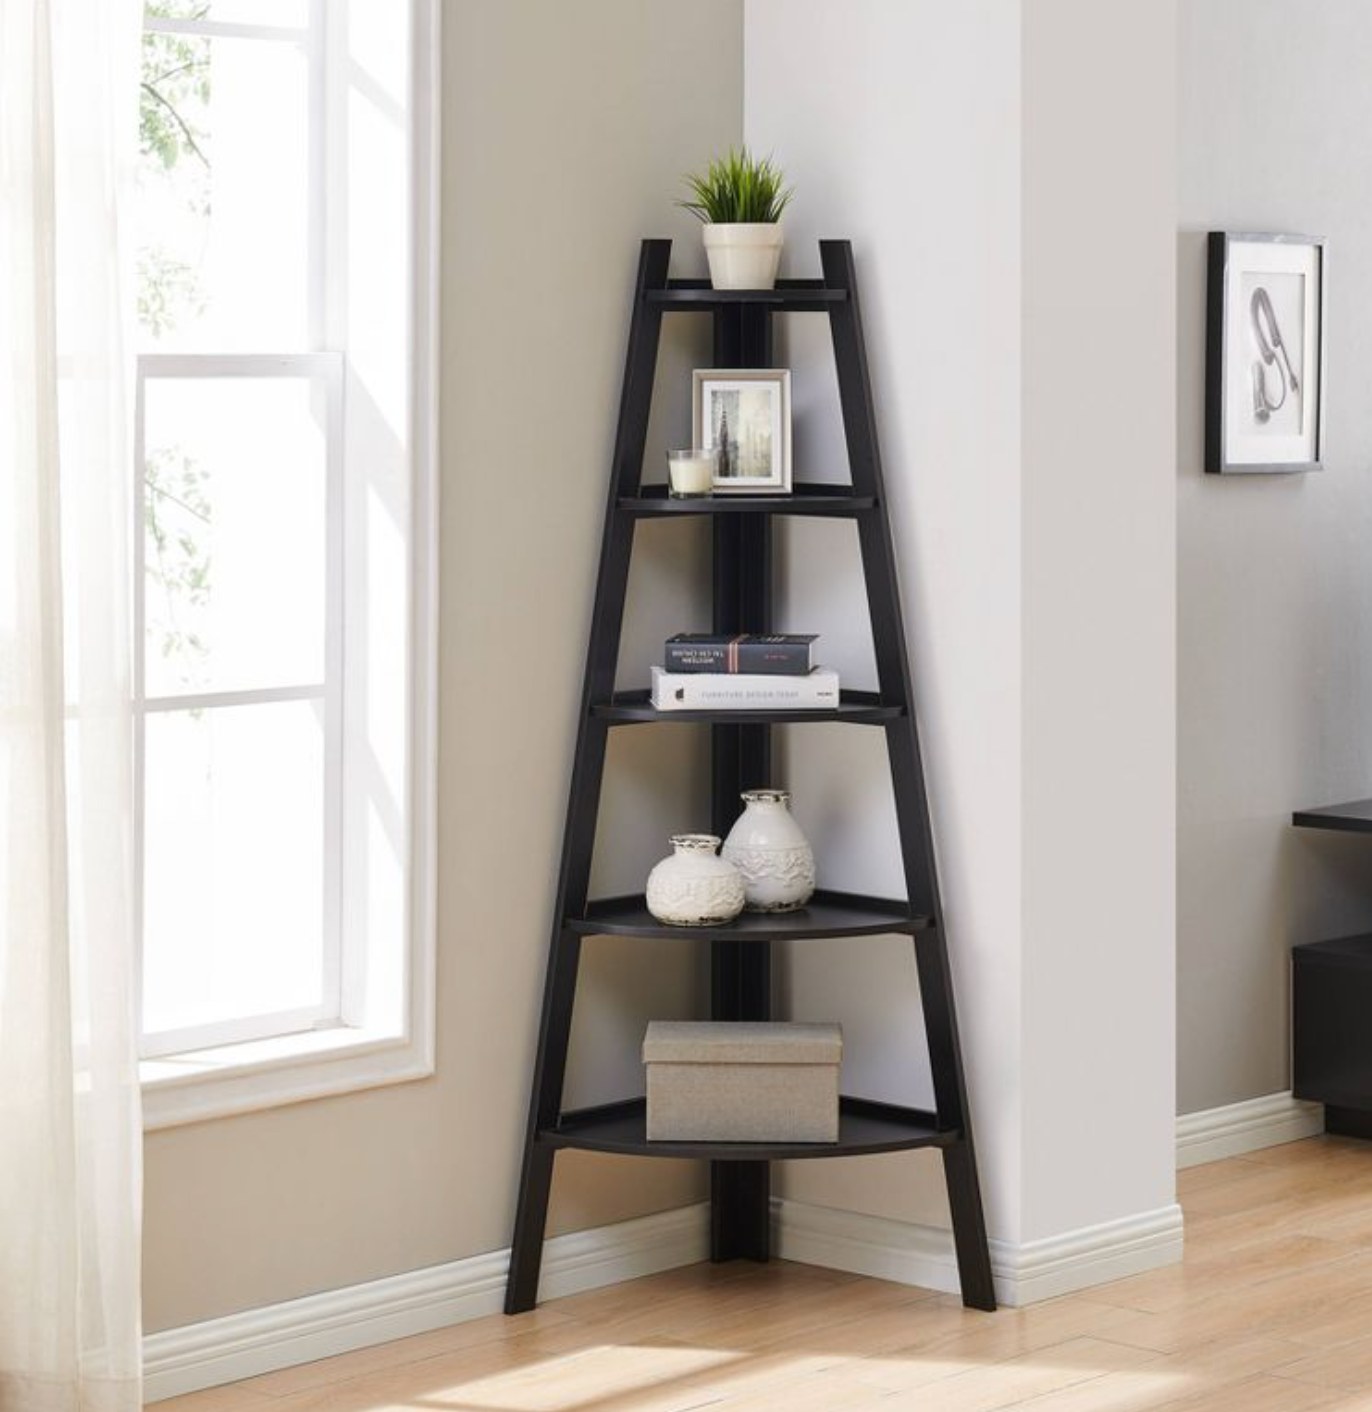 Black ladder corner bookshelf with candles, frames, and books on shelves